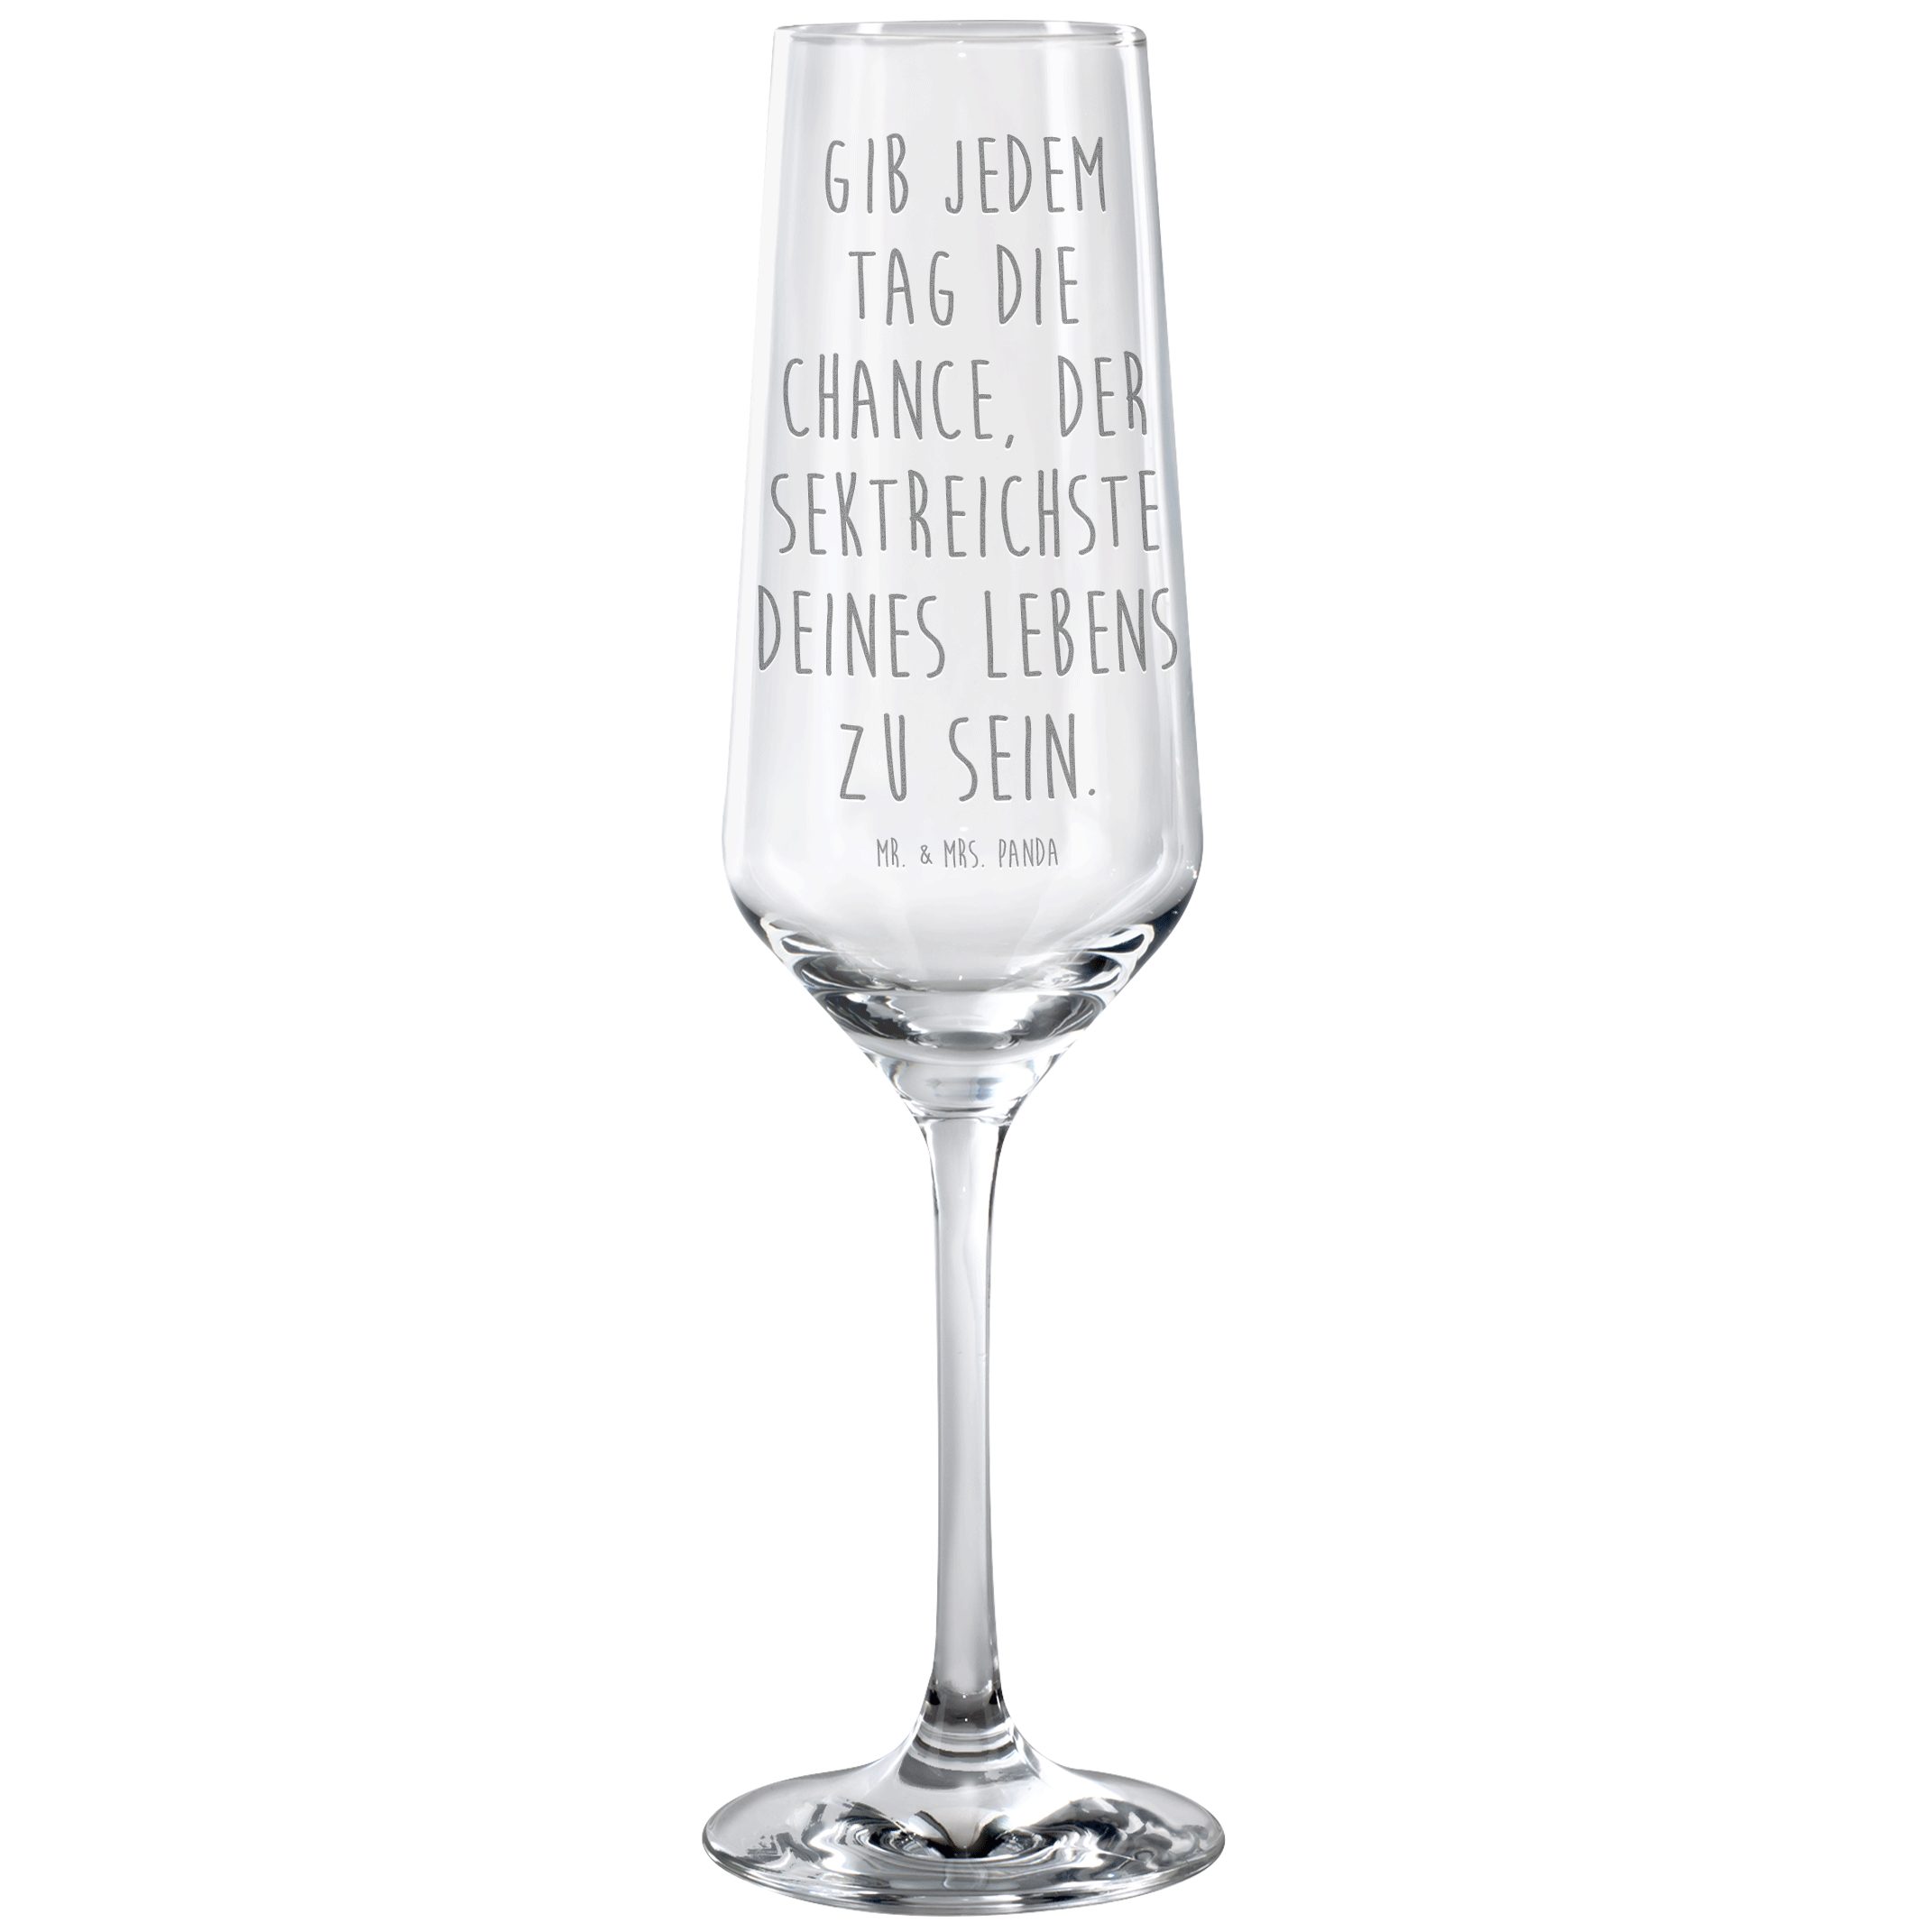 Mr. & Mrs. Panda Sektglas Tag Sektglas - Transparent - Geschenk, Optimismus, Spülmaschinenfeste, Premium Glas, Hochwertige Gravur